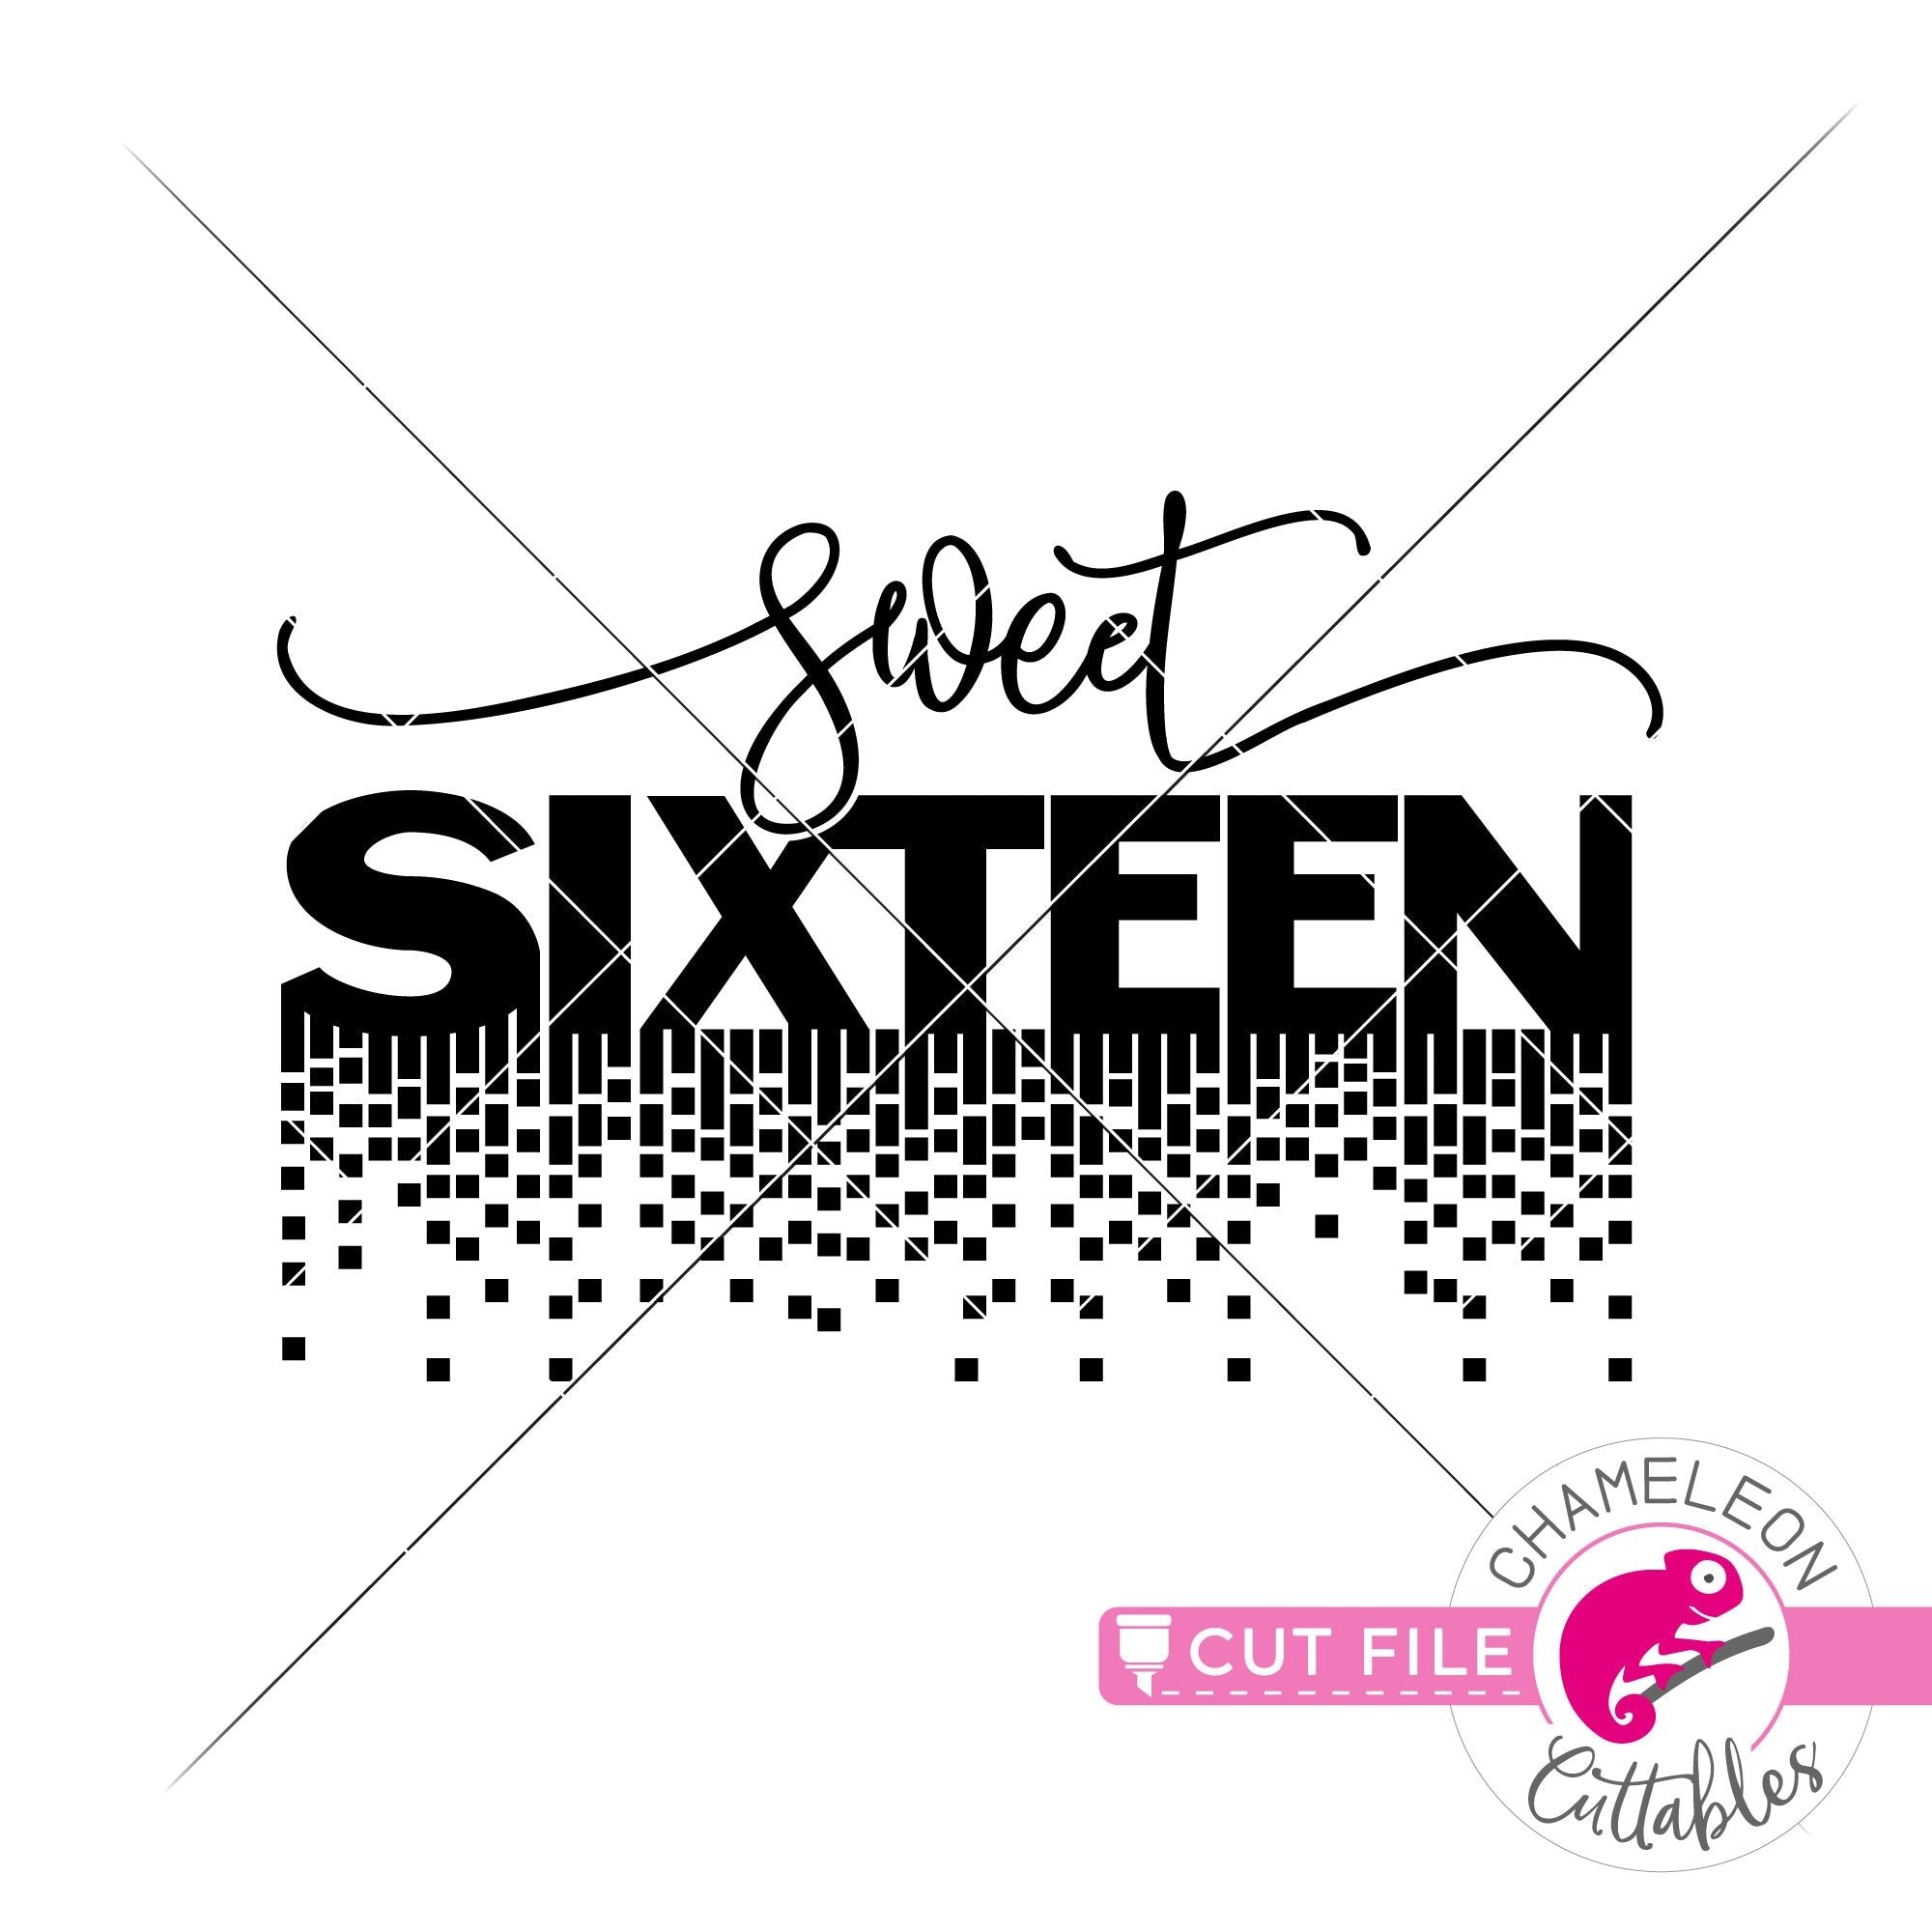 Download Sweet Sixteen 16th Birthday Svg Png Dxf Eps Jpeg Chameleon Cuttables Llc Chameleon Cuttables Llc